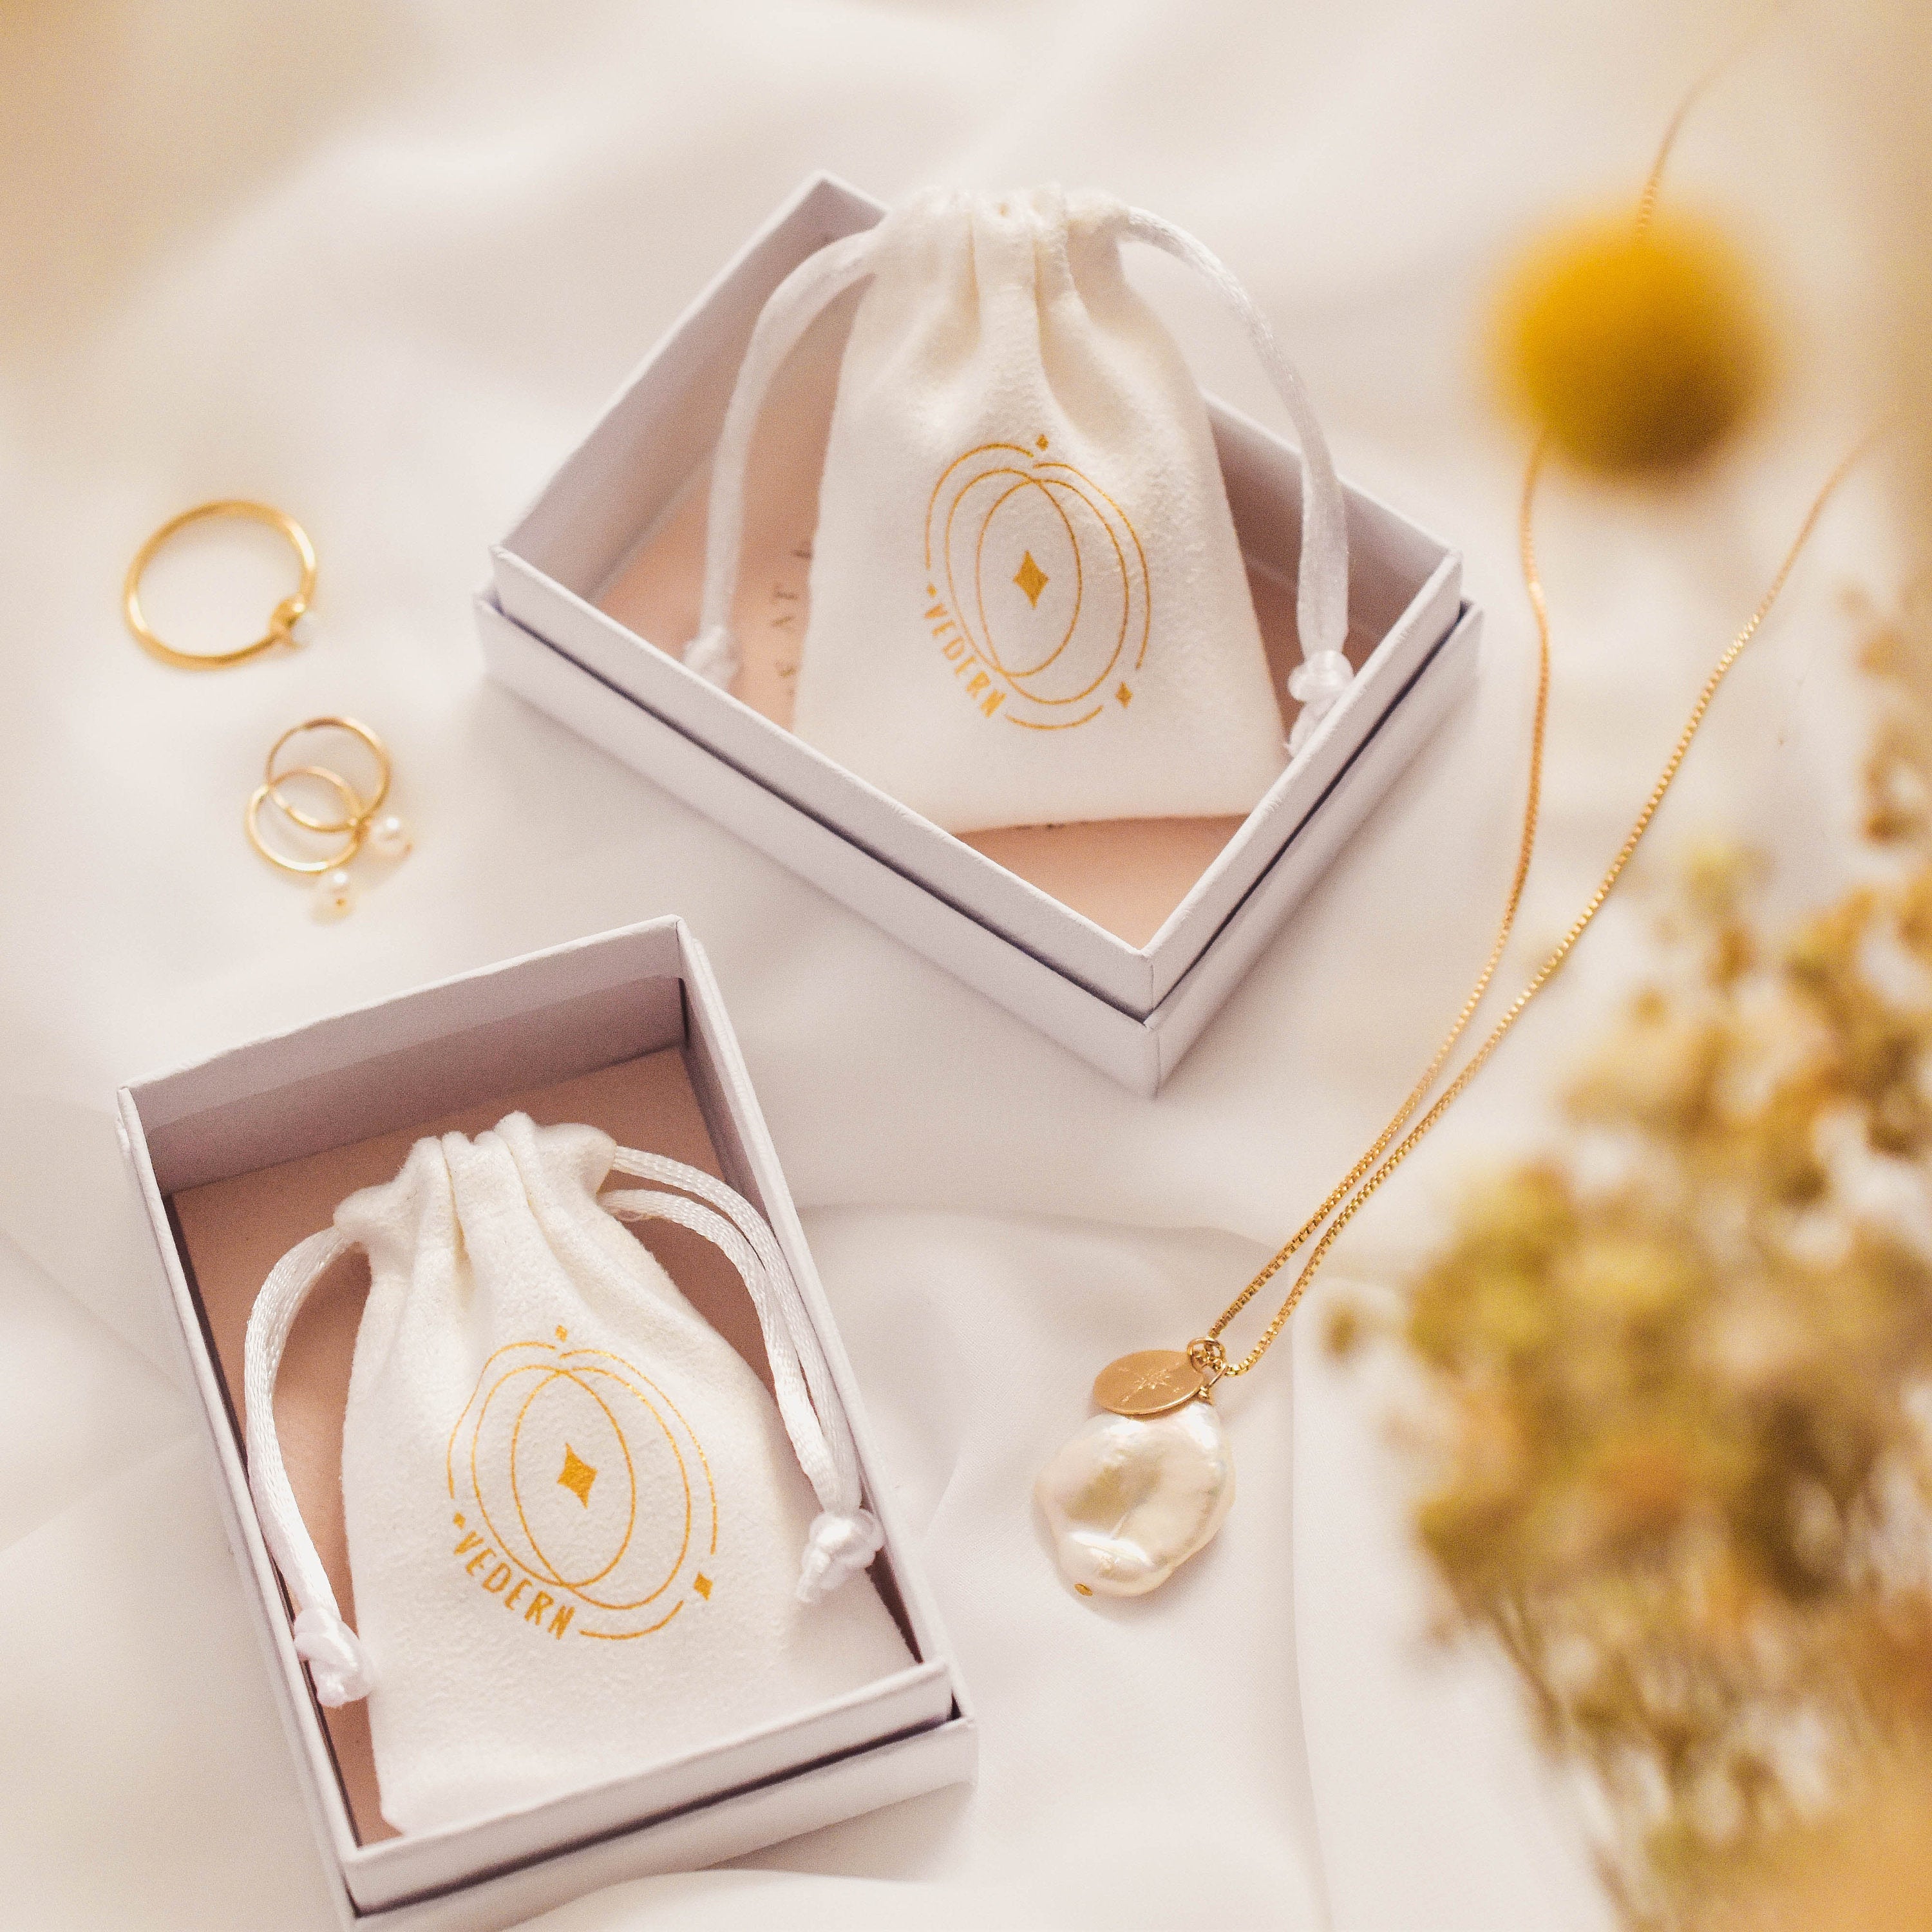 Daisy Earrings - Flower earrings, Daisy flower earrings, gold daisy earrings, dainty flower earrings, small pretty gold earrings |GPE00010